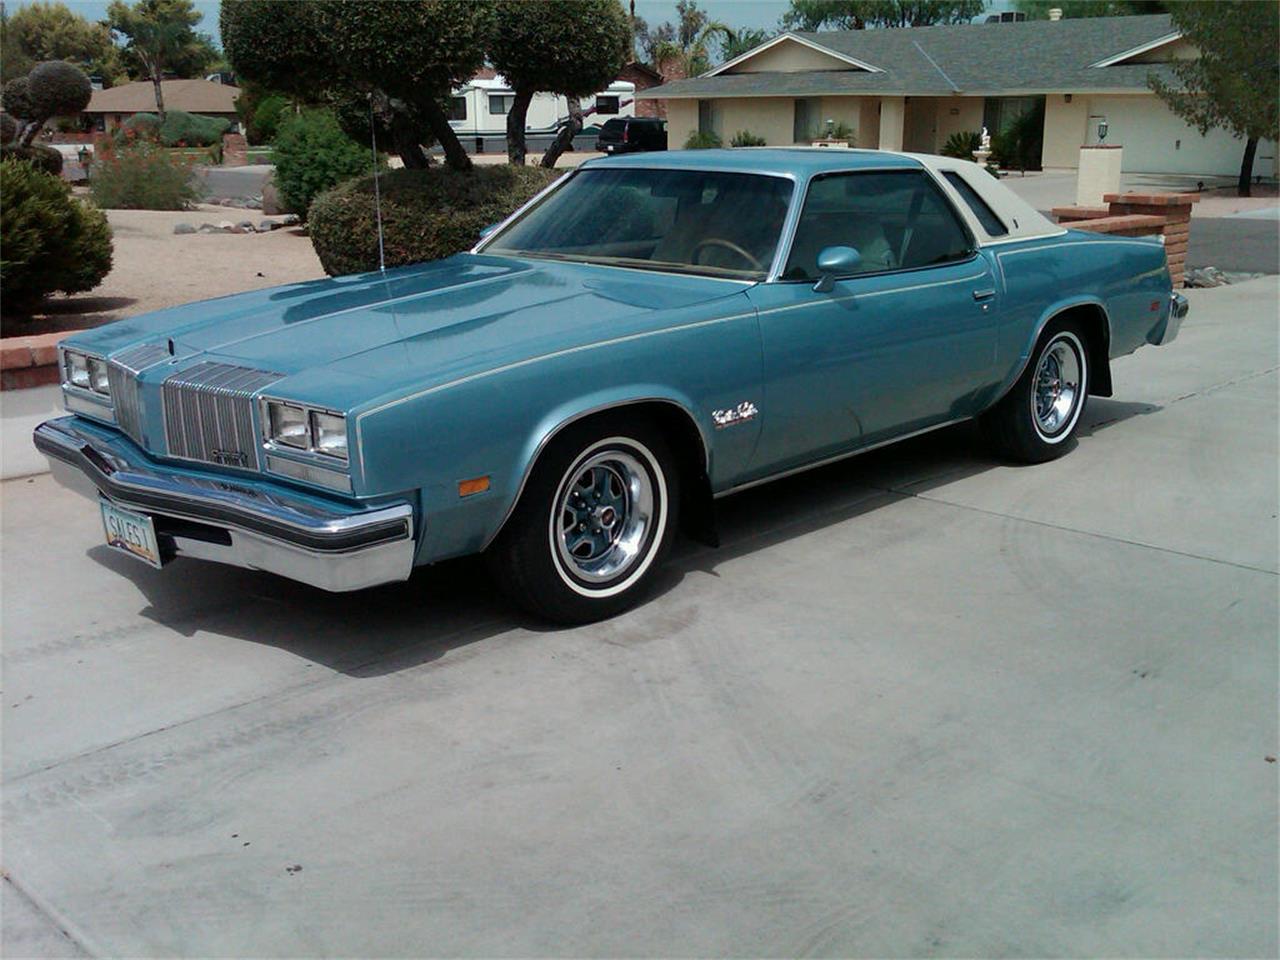 For Sale: 1977 Oldsmobile Cutlass in Glendale, Arizona.